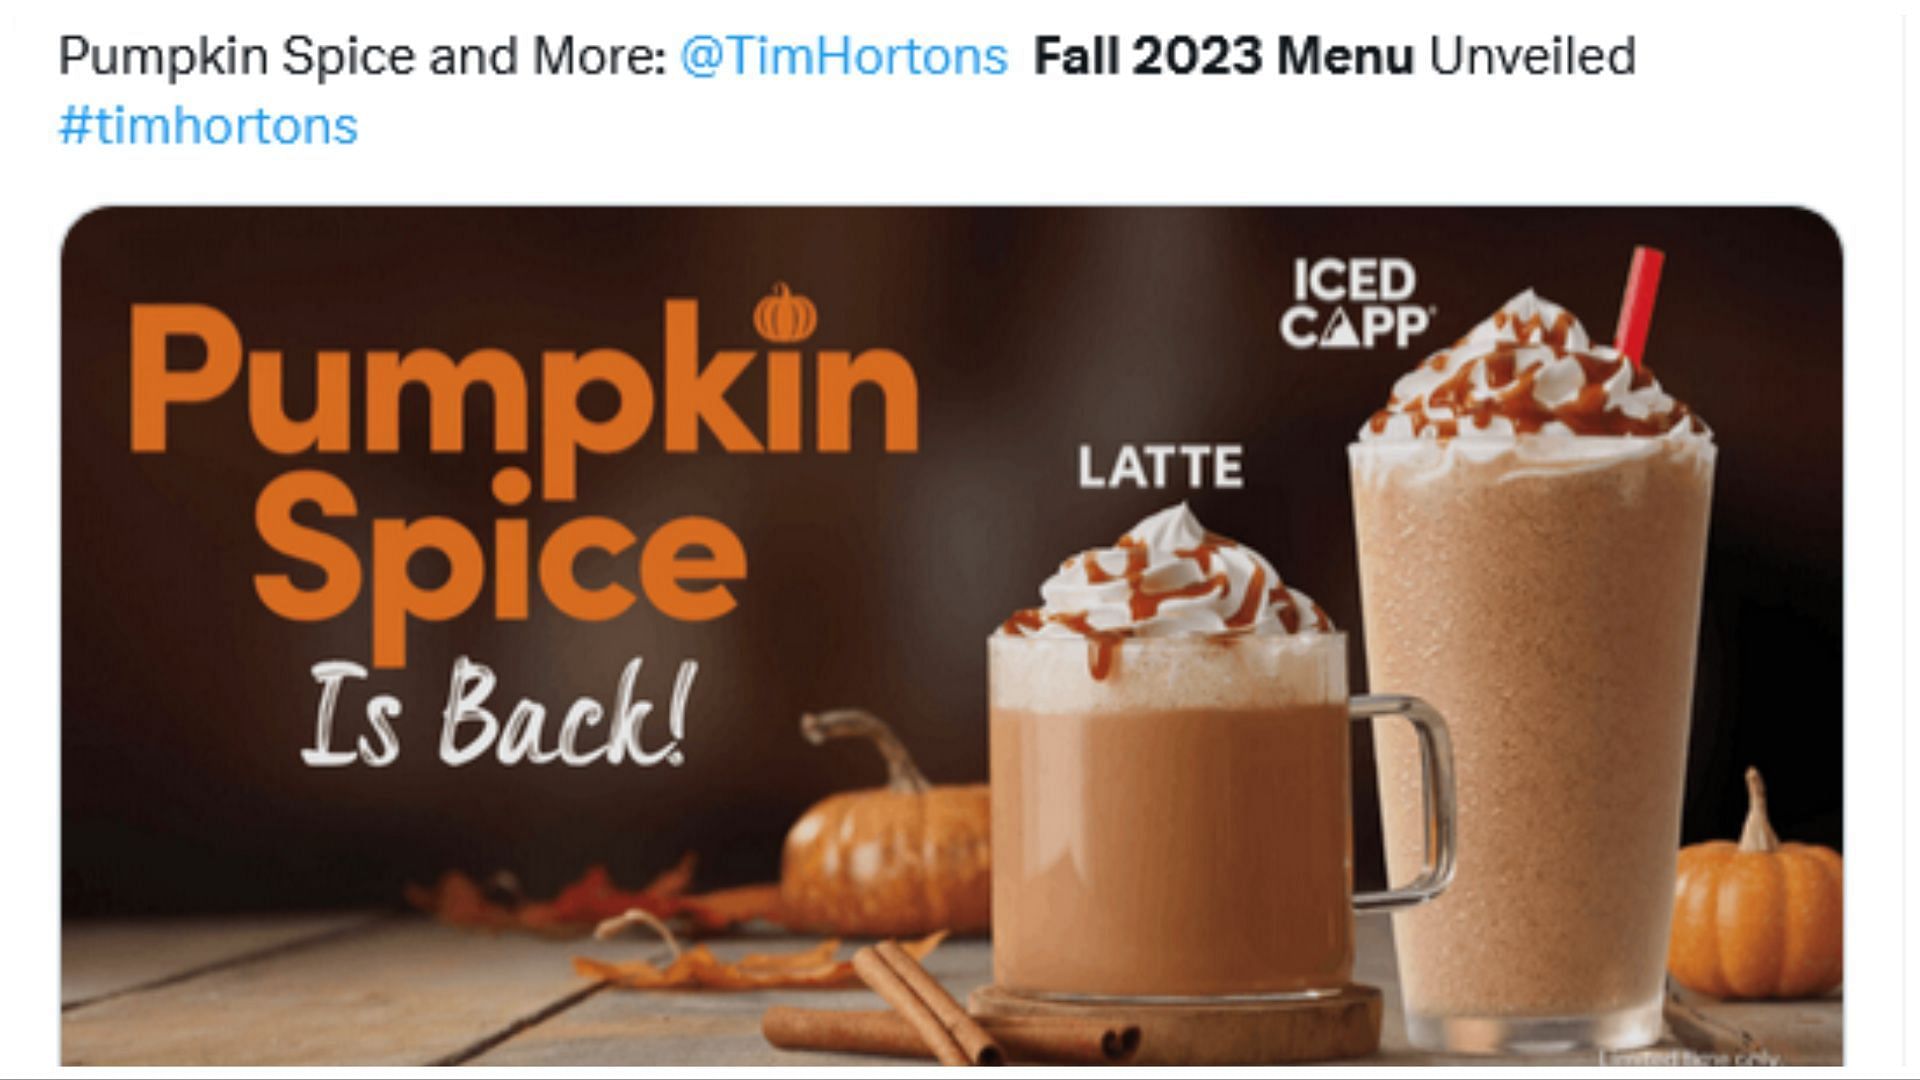 Tim Hortons Canada Pumpkin Spice & Fall Menu 2023 - Foodgressing